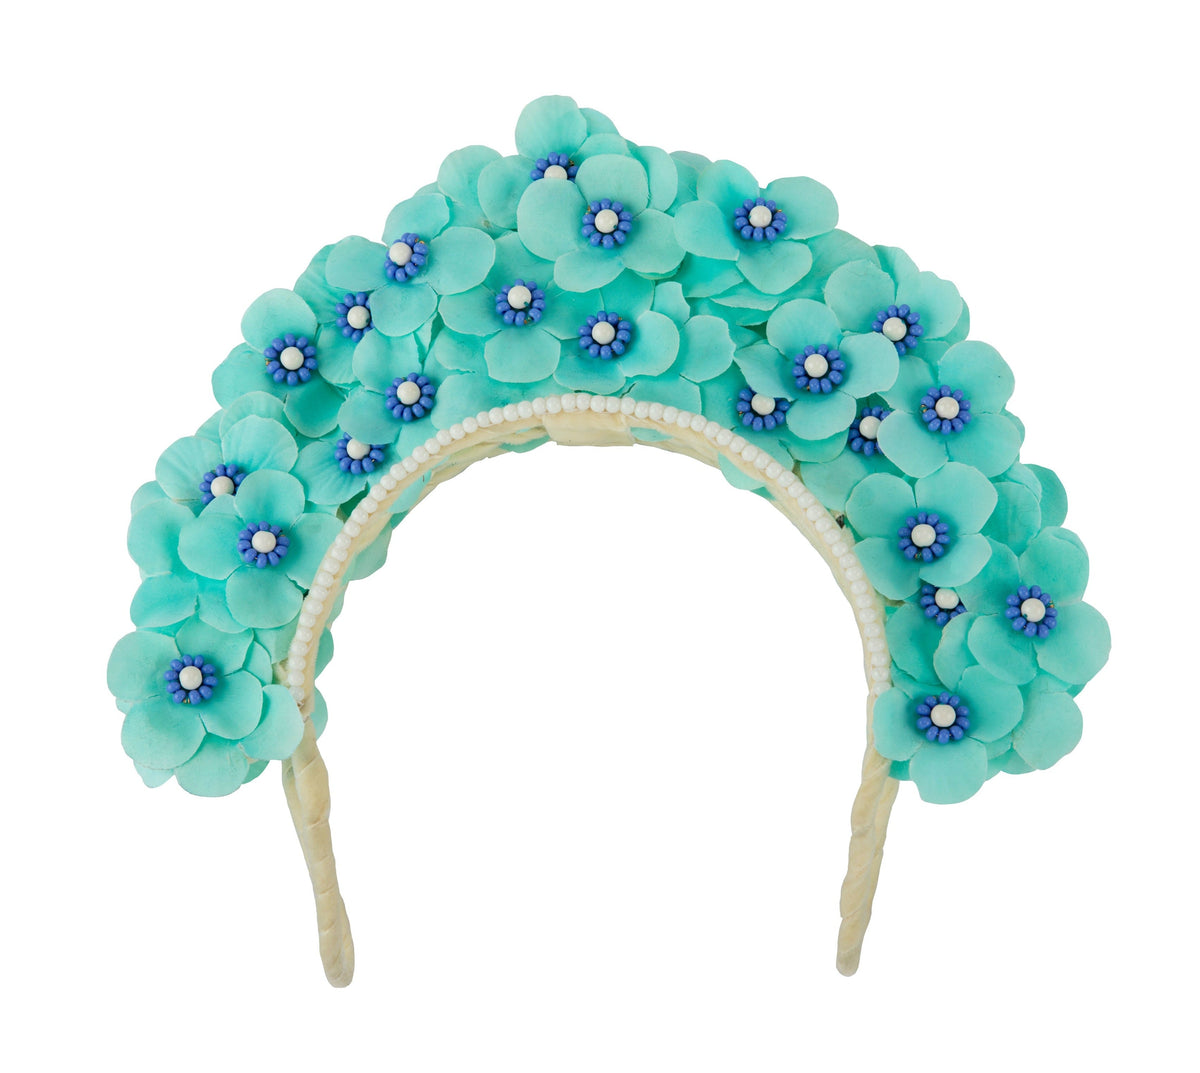 Flower Crown Headpiece in Blue